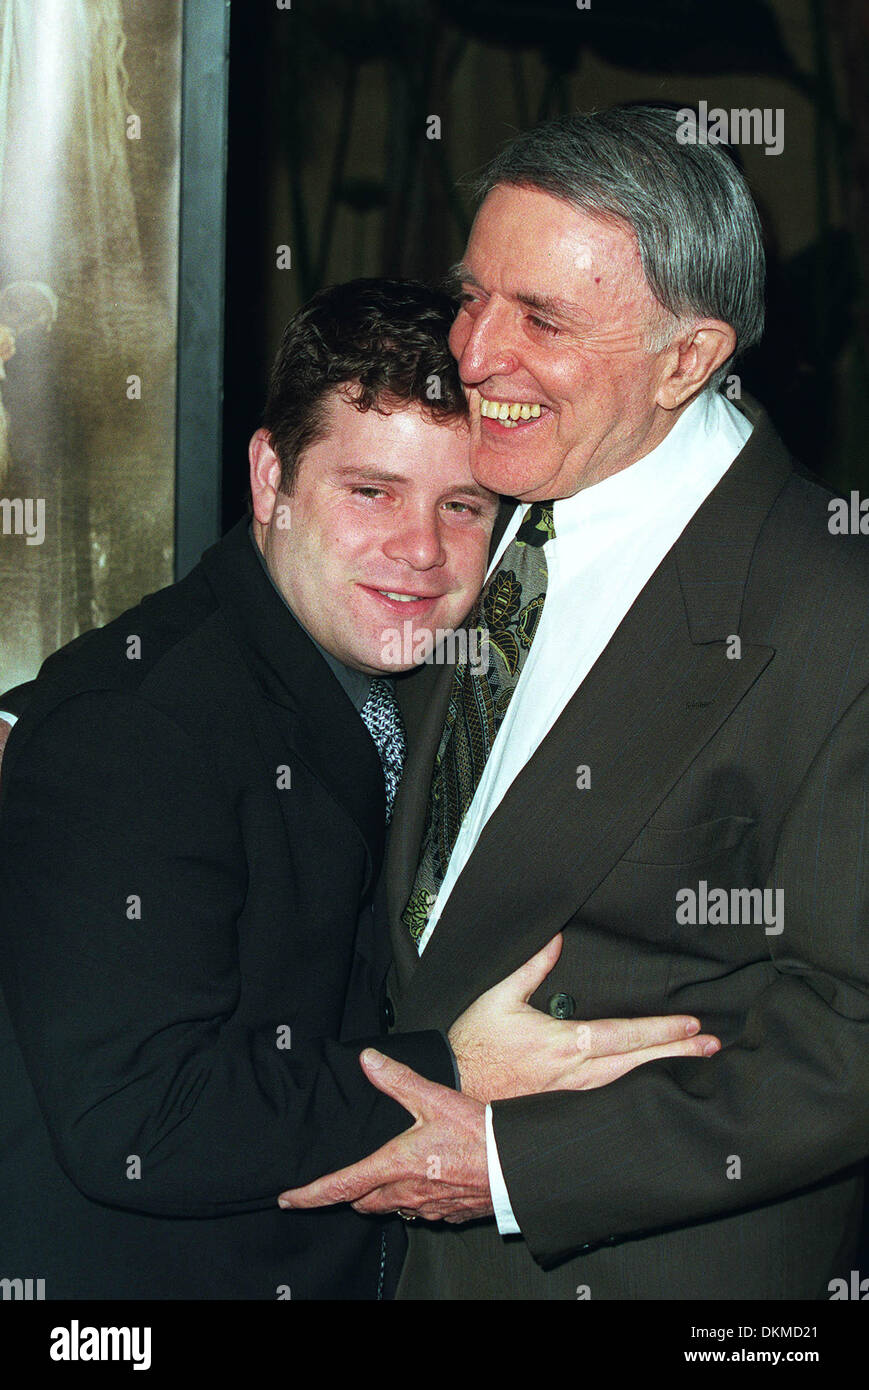 JOHN ASTIN & SEAN ASTIN.ACTORS.LOS ANGELES, USA.16/12/2001.BN91F4 Stock Photo